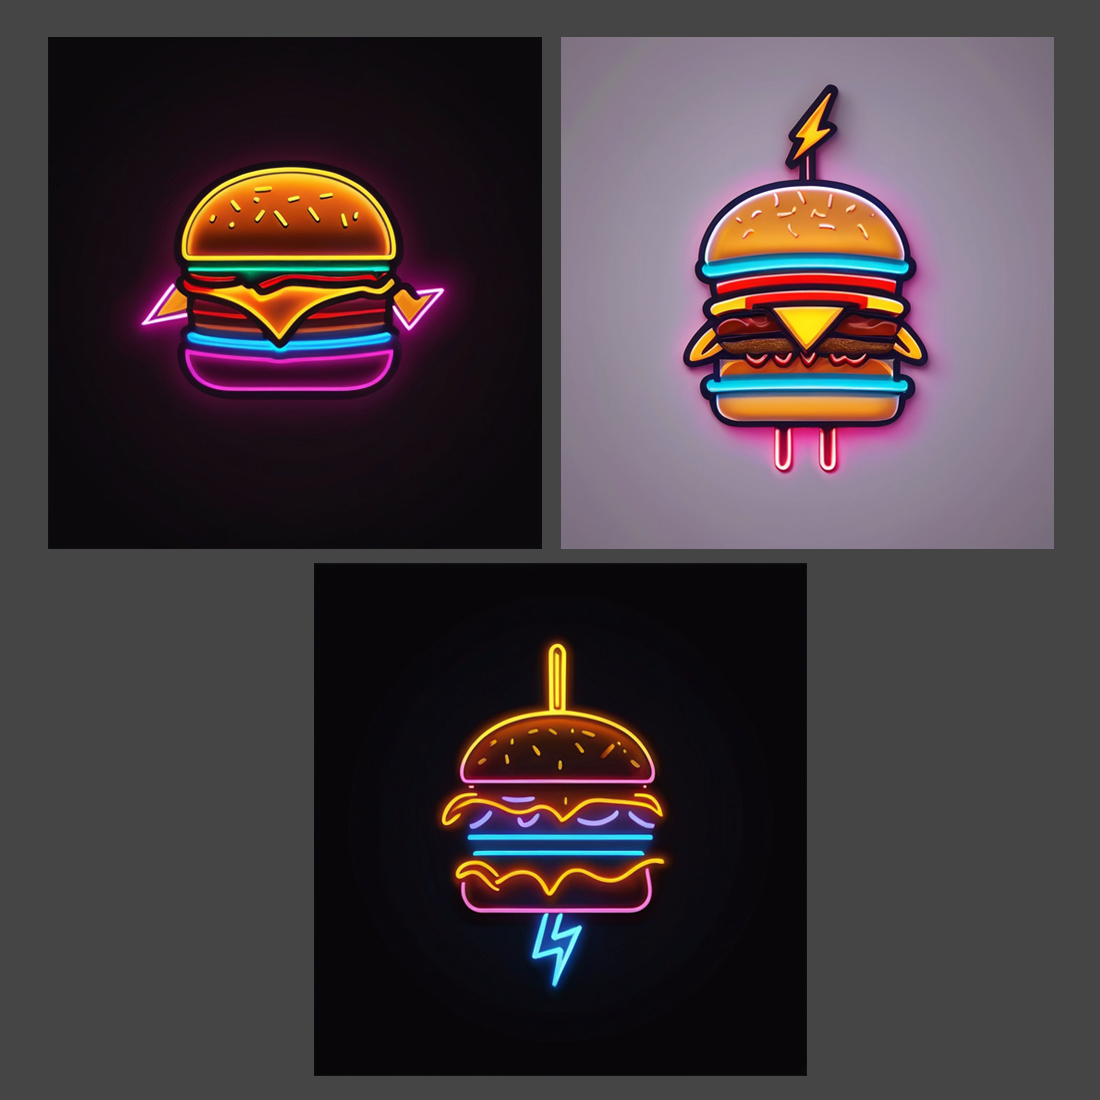 Burger - Neon Light 3D Effects Logo Design Template cover image.